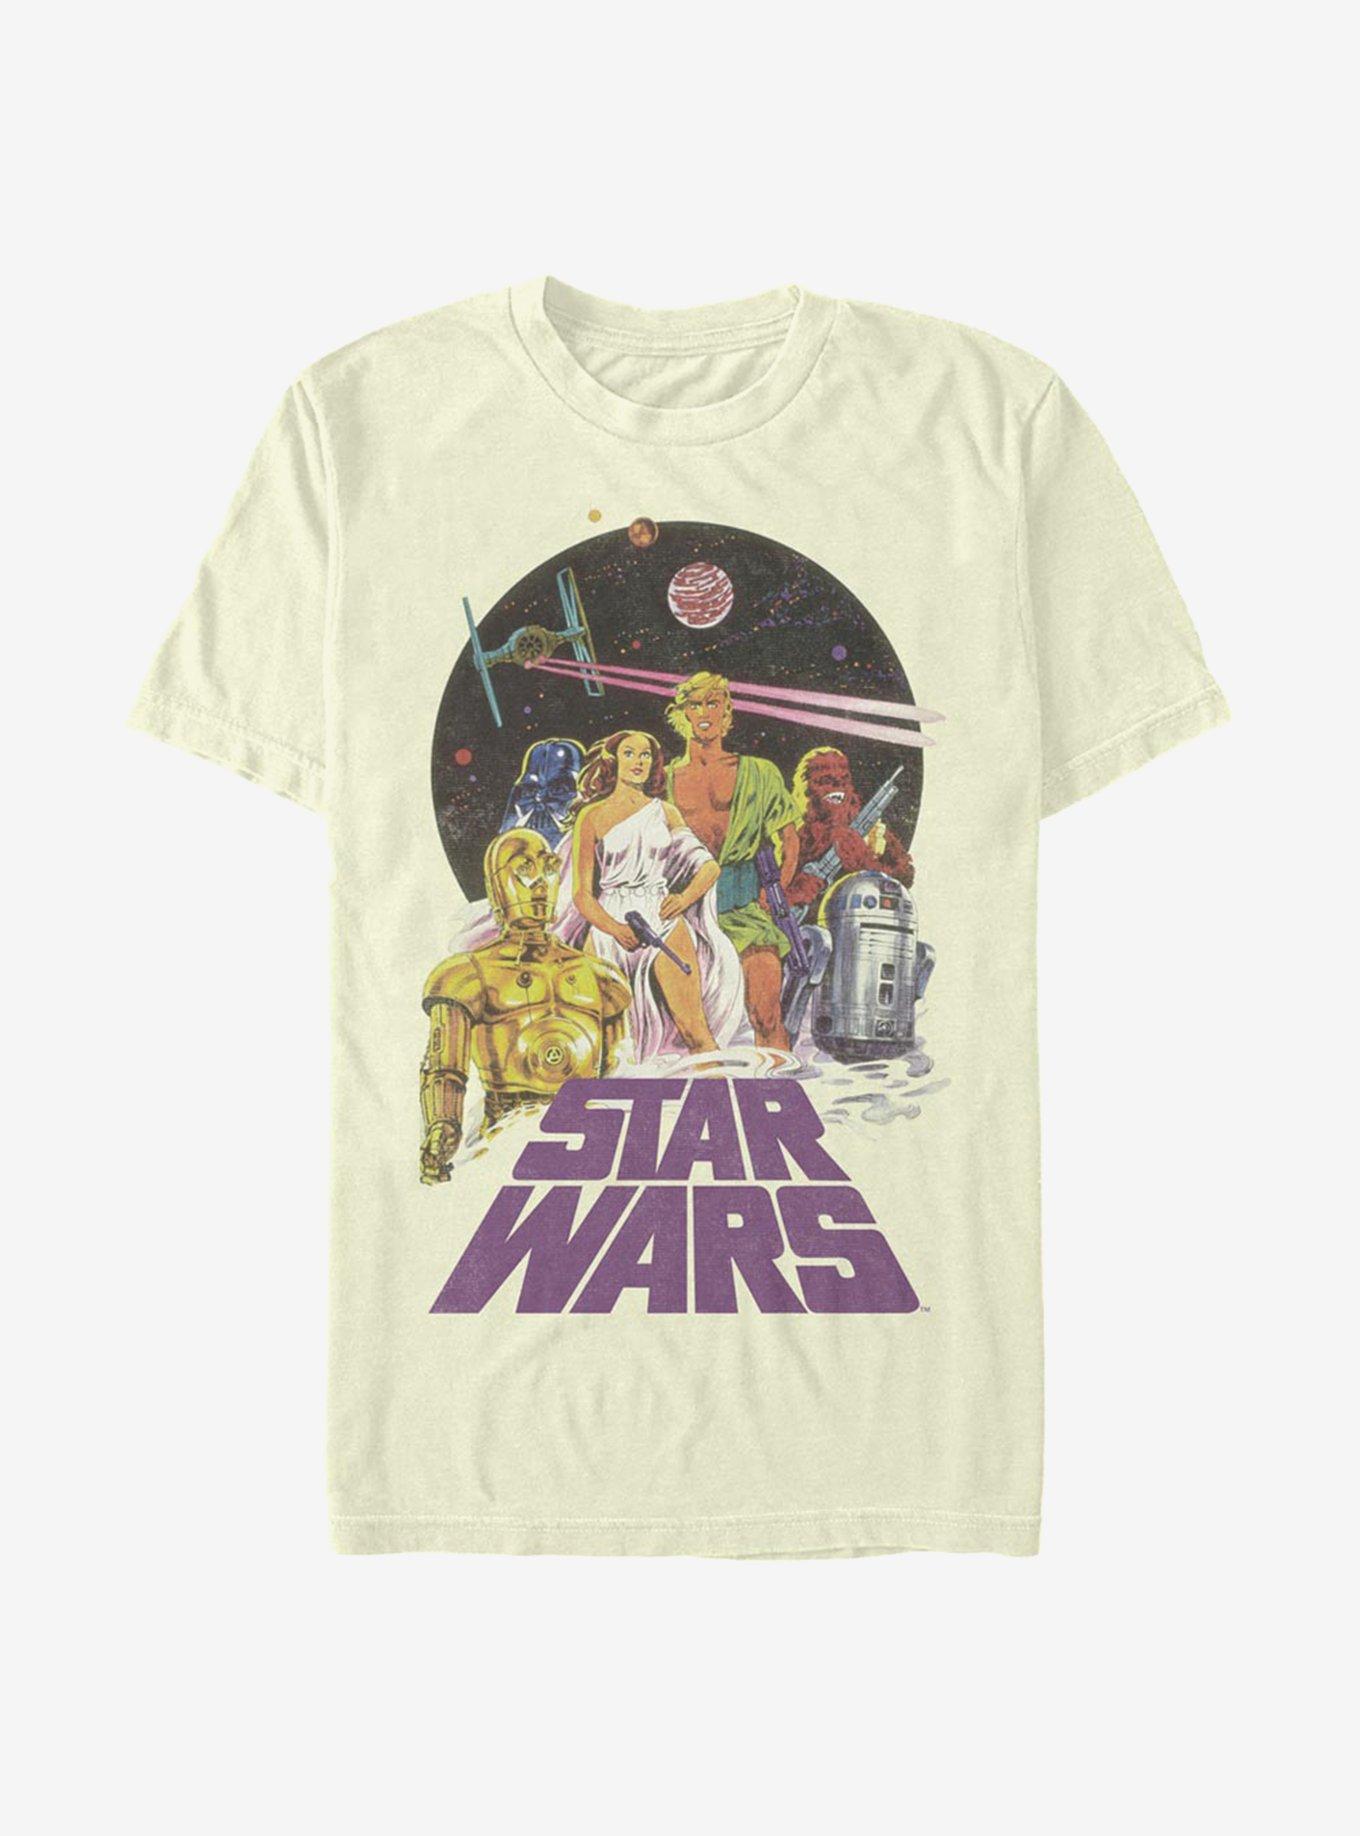 Star Wars Vintage Star Wars T-Shirt - BEIGETAN | Hot Topic